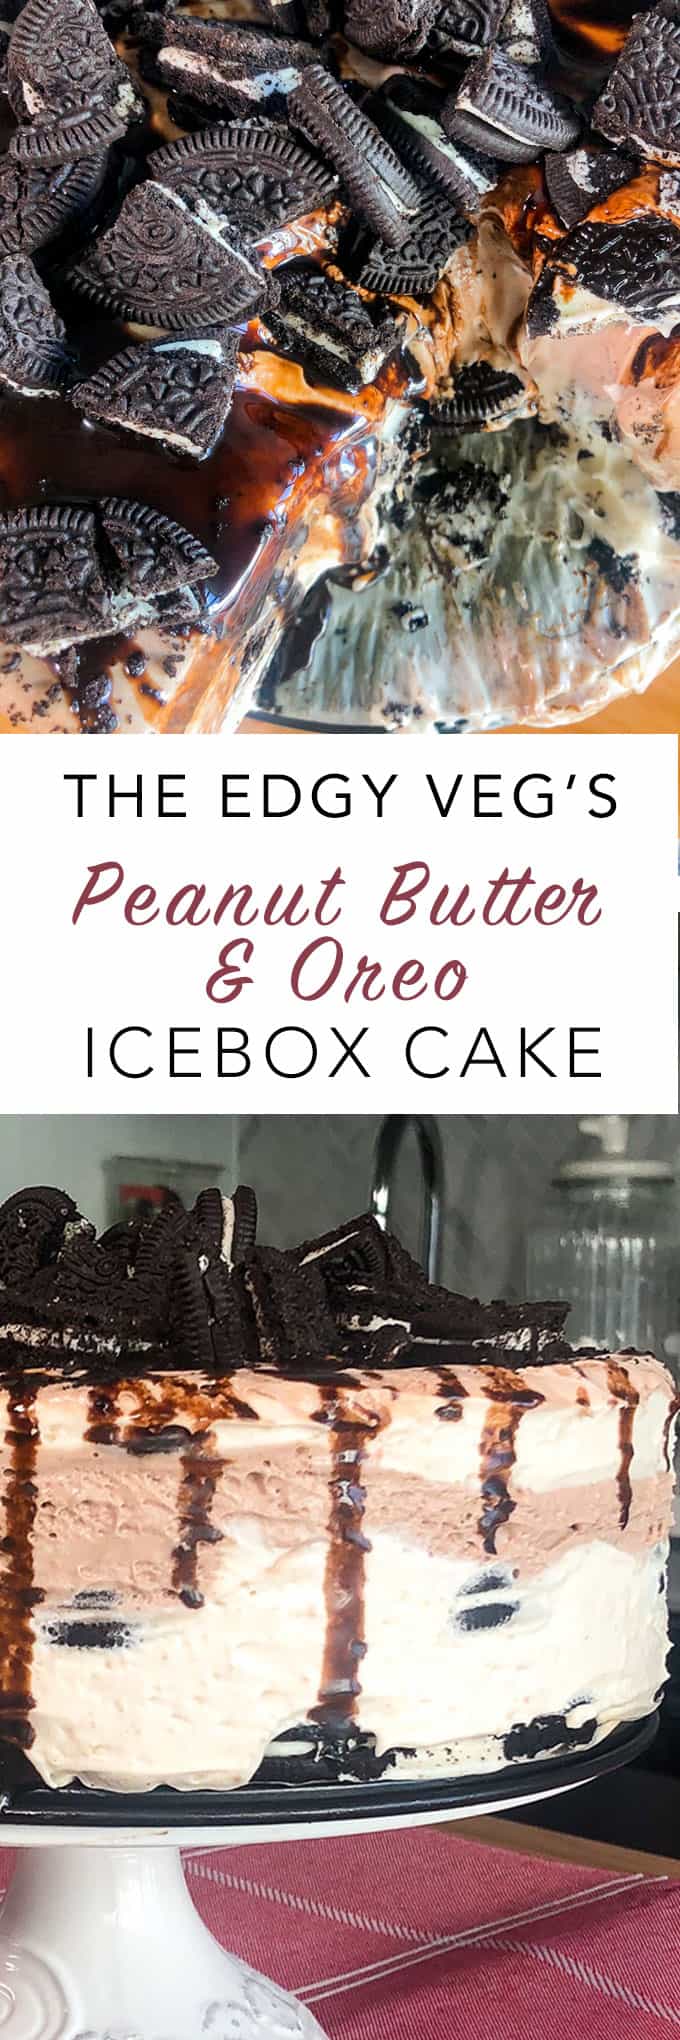 IceBox Cake Recipe Pinterest